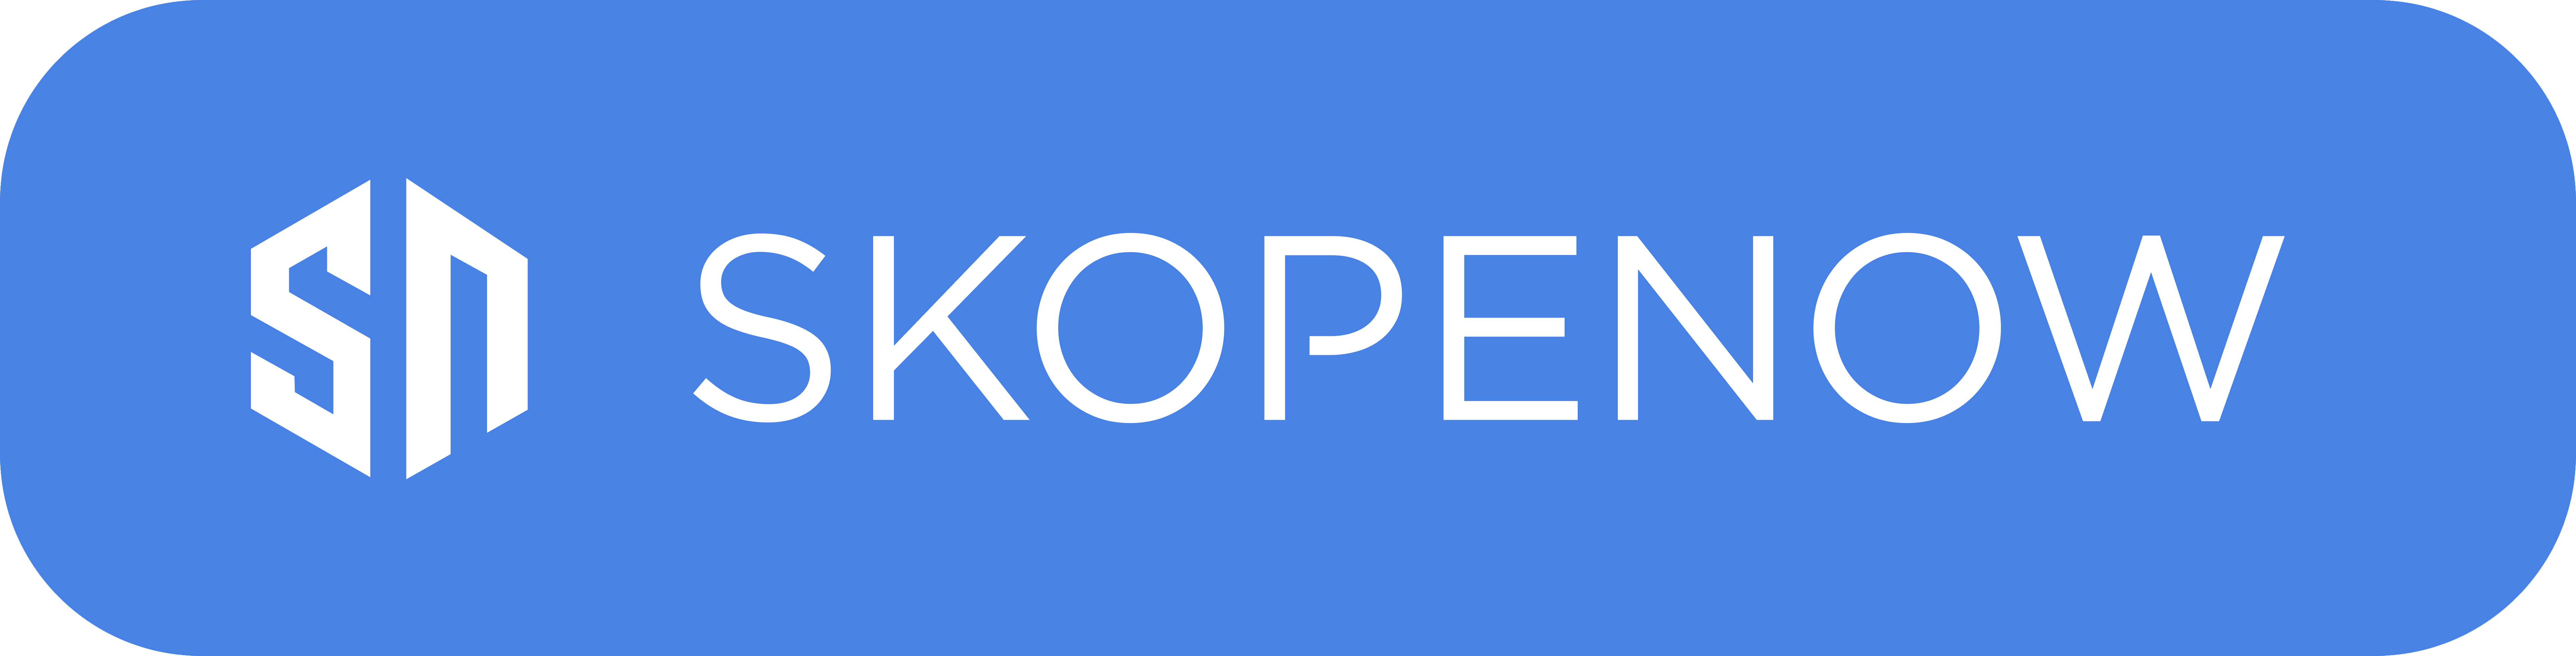 skopenow-sponsor-logo